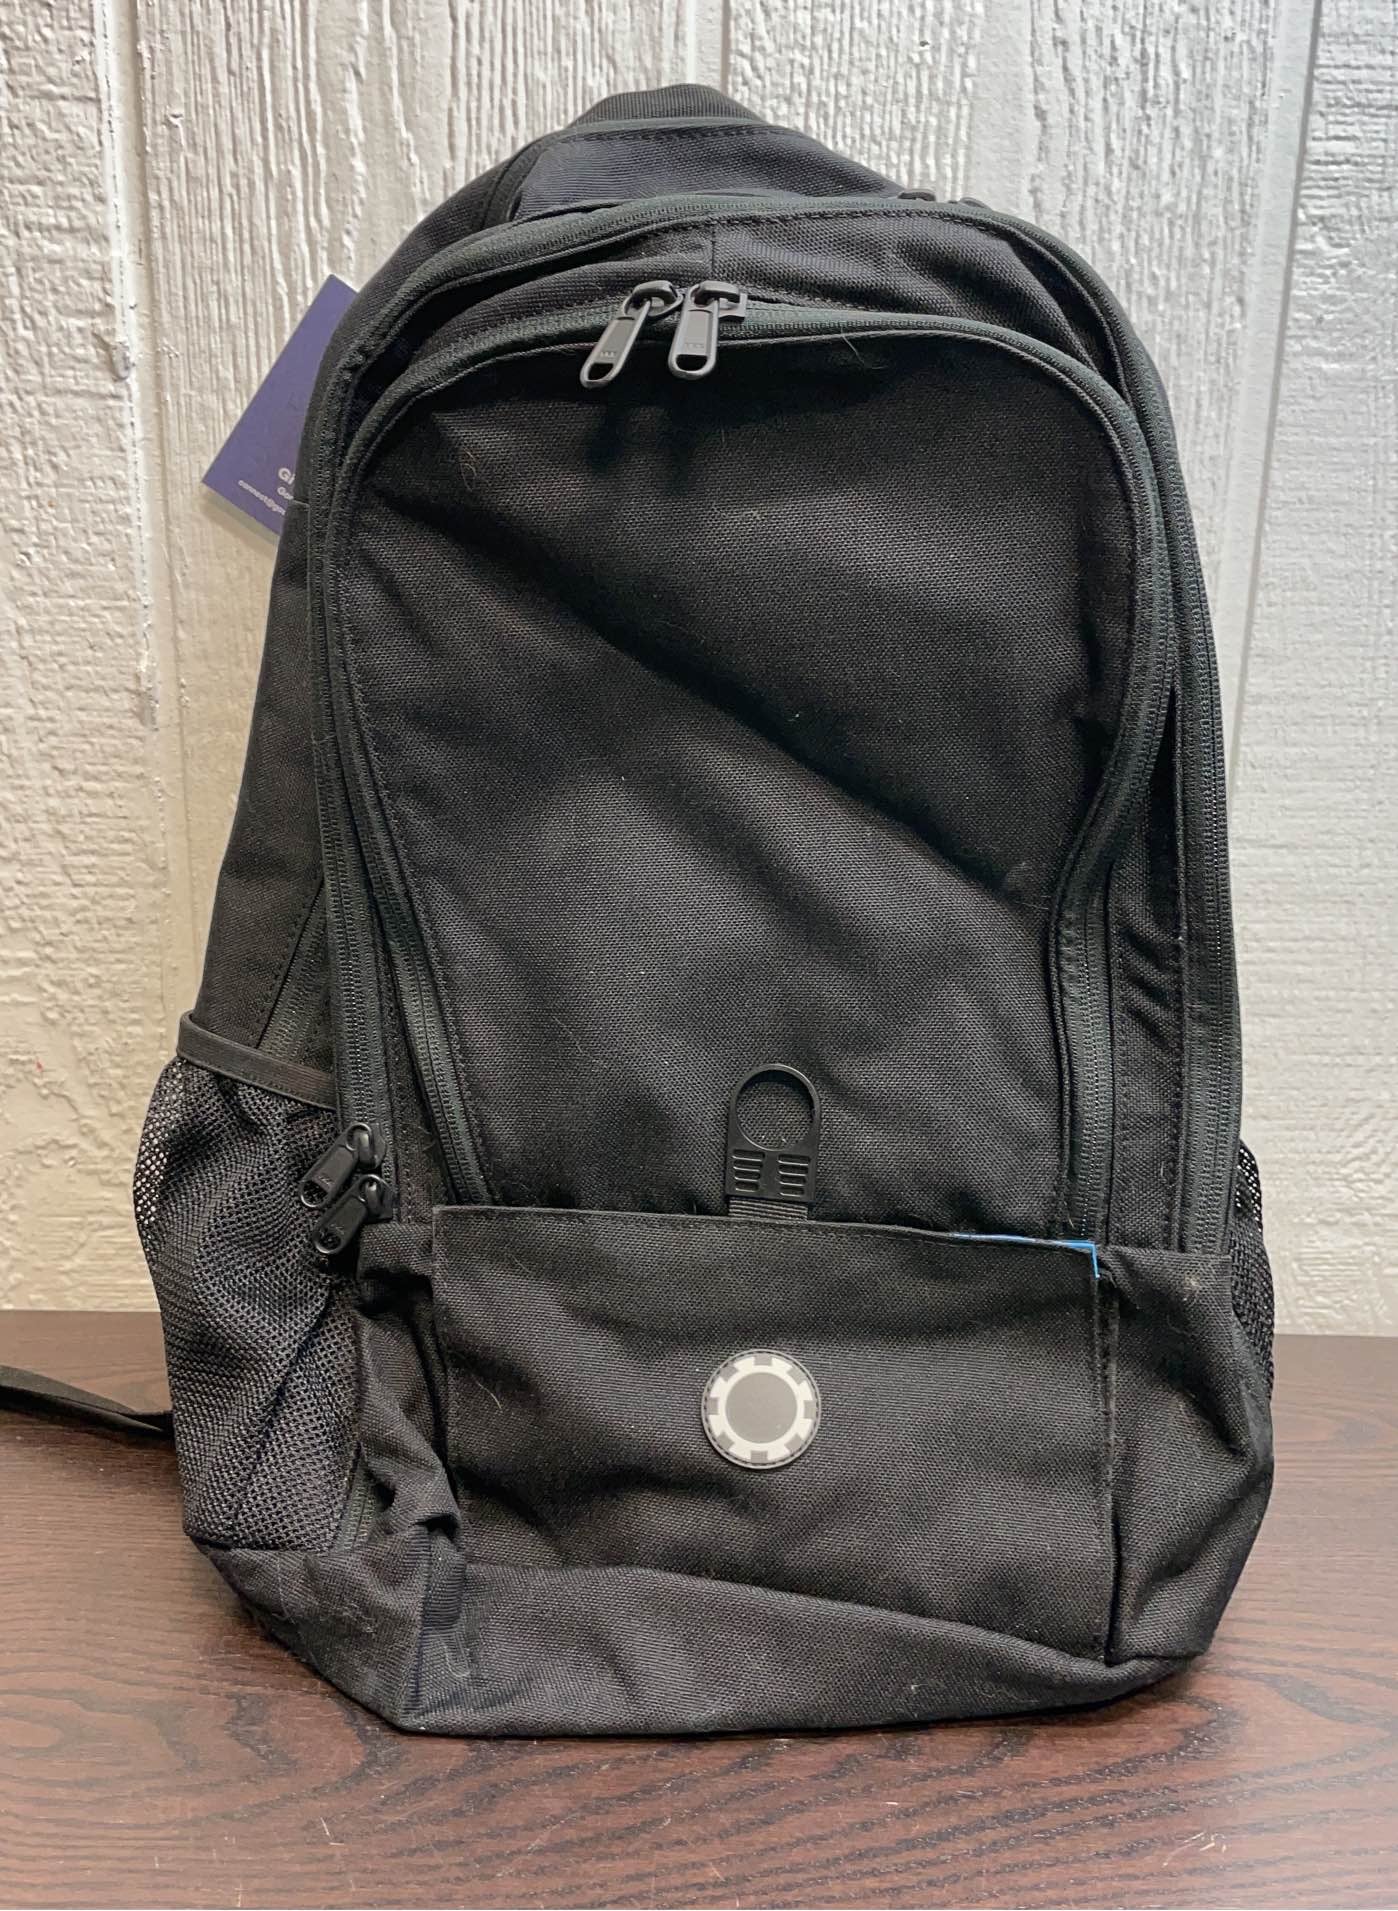 DadGear Backpack Diaper Bag, Black